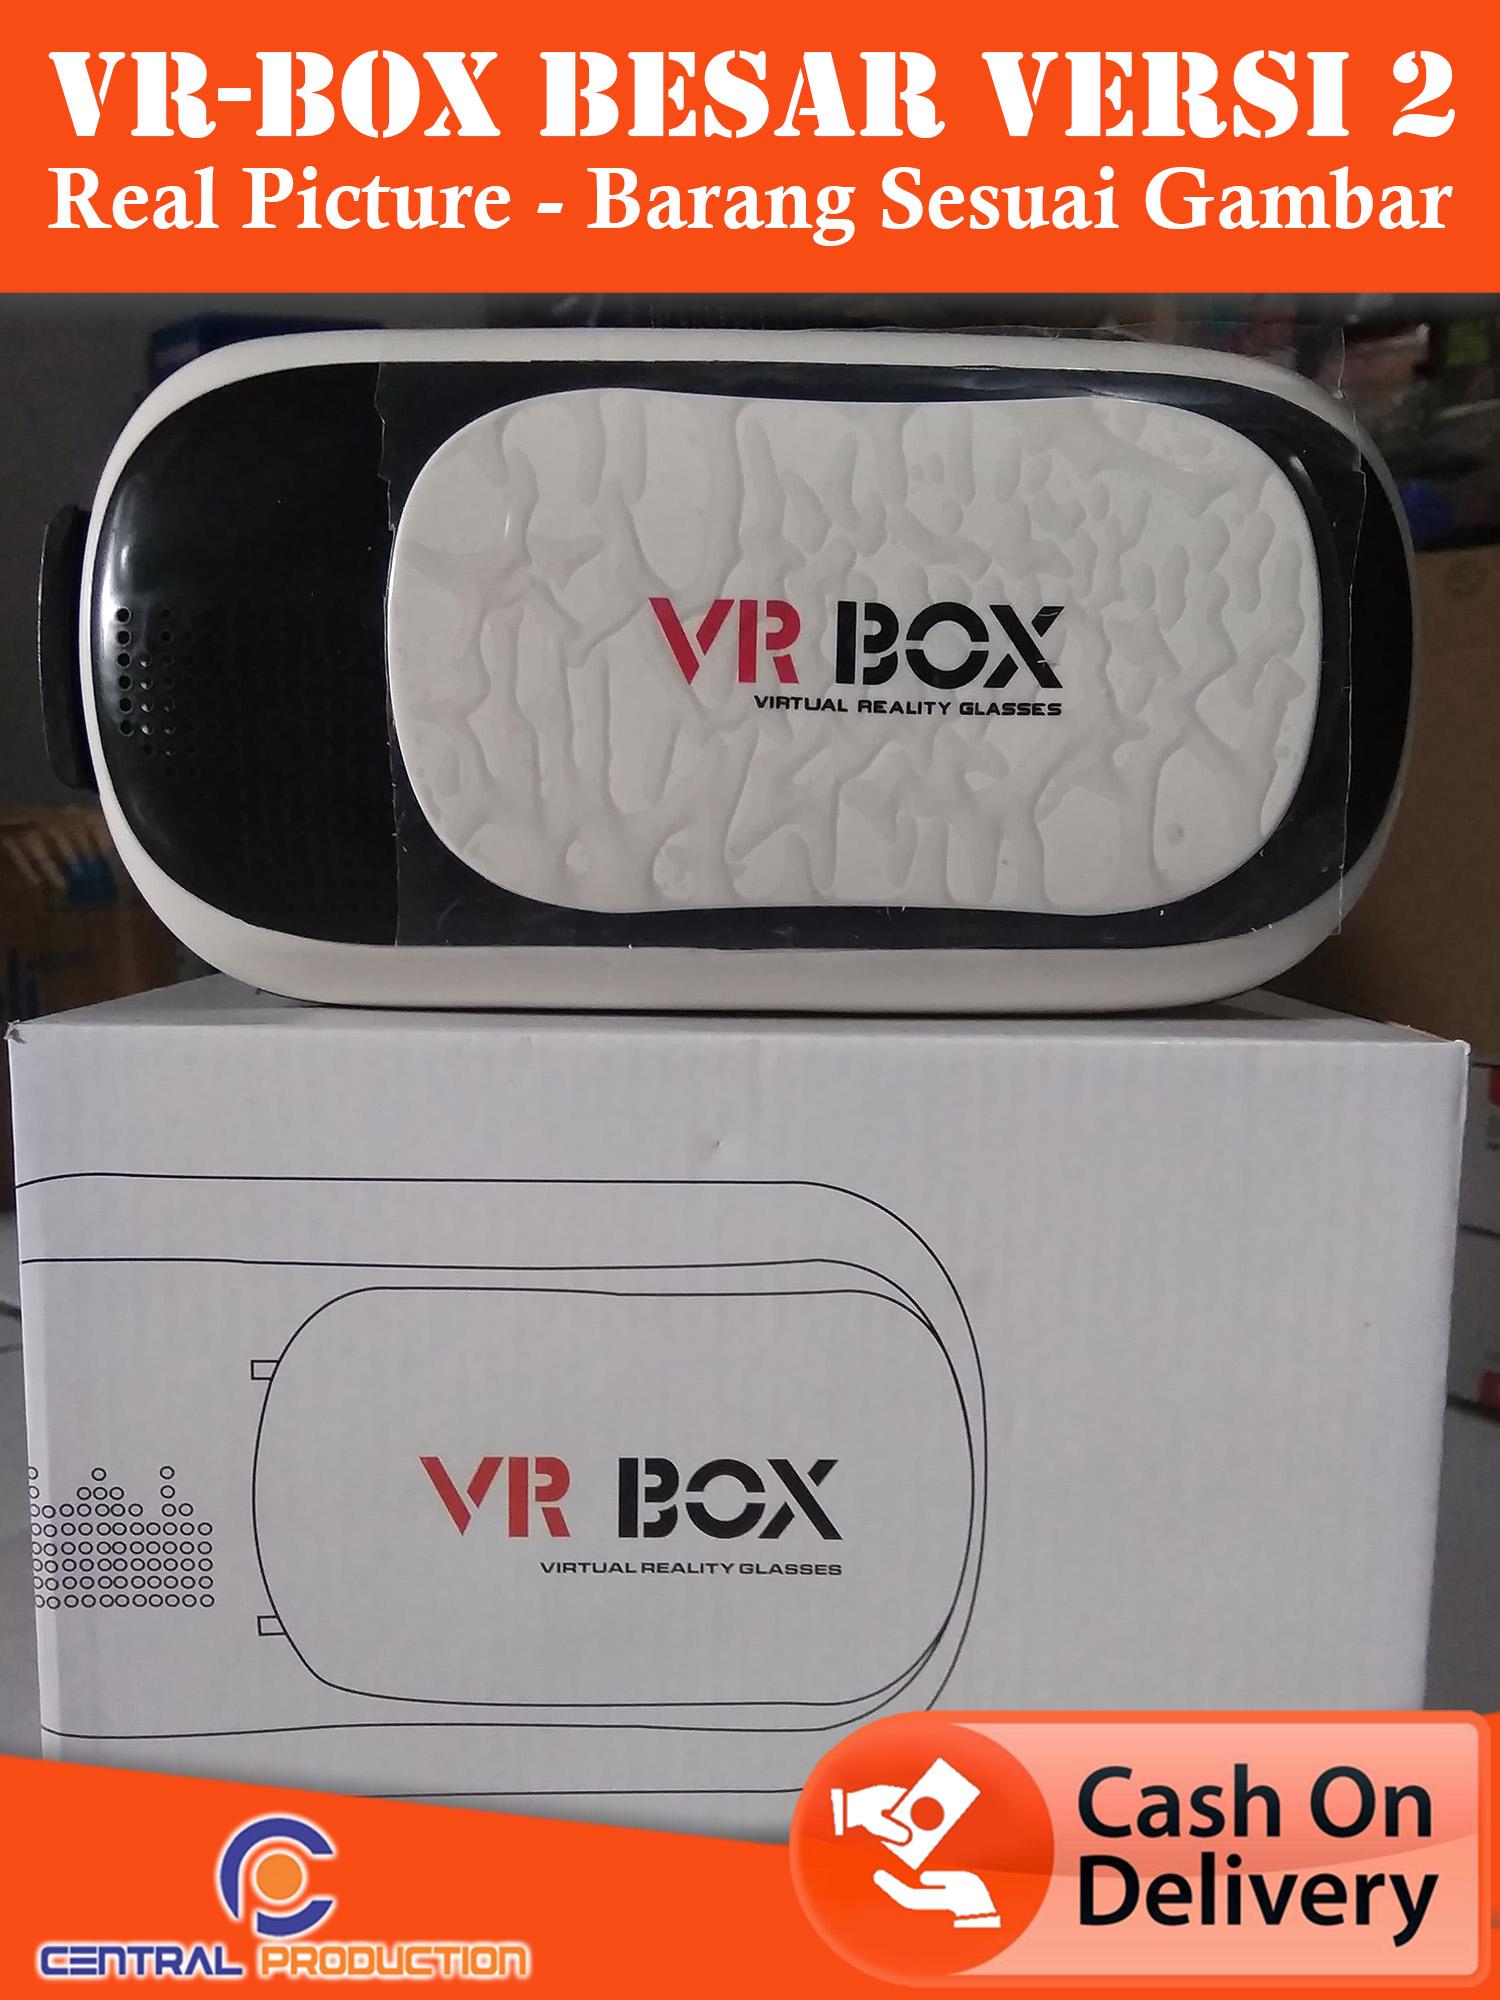 Kelebihan Virtual Reality Glasses Vr Box 3d Glasses Besar Free